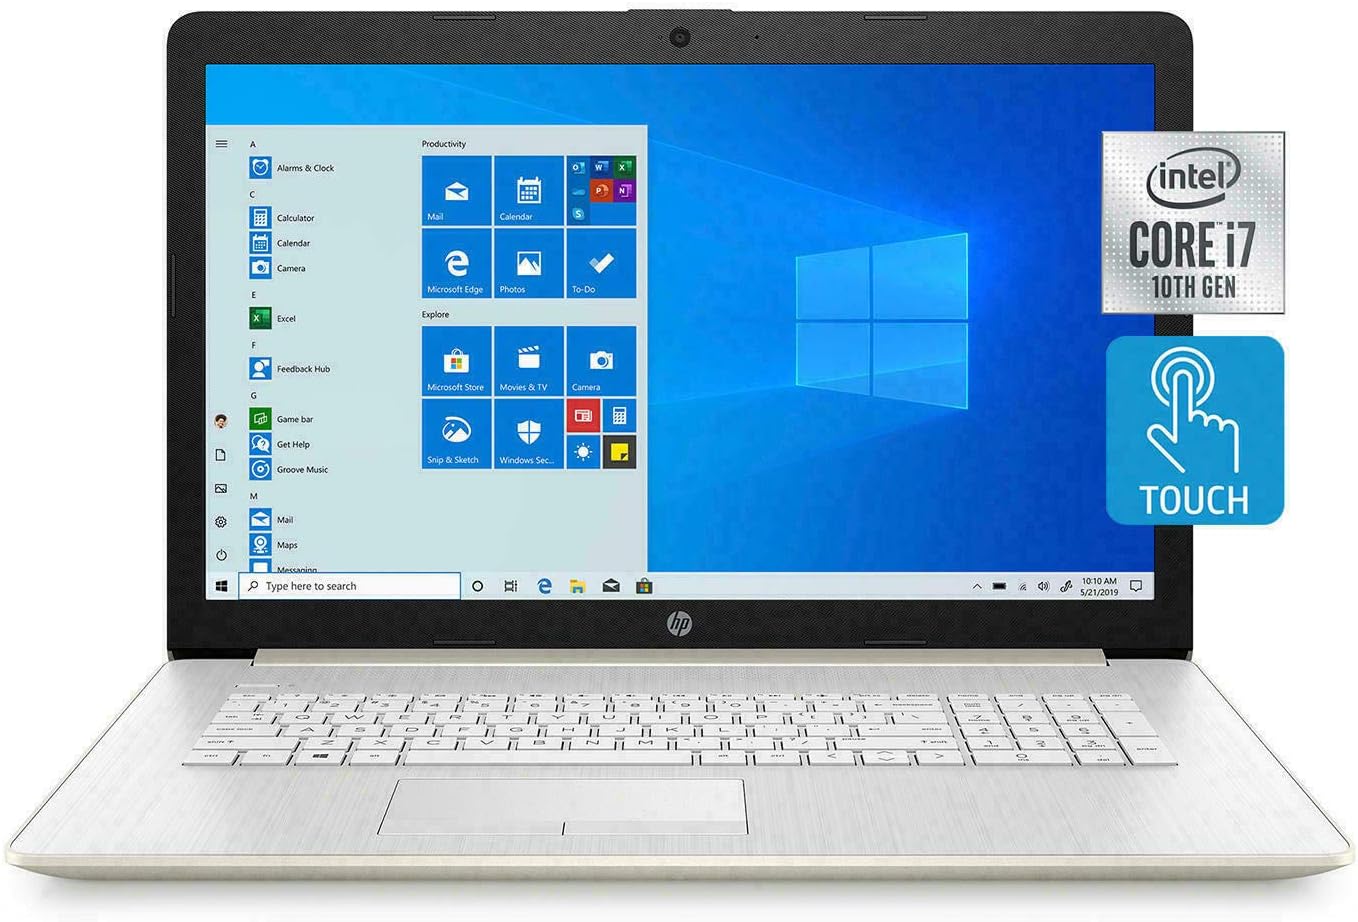 HP 17t Cg series Laptop Computer PC, 17.3" HD+ SVA WLED Touchscreen Display, 10th Gen Intel Quad-Core i7-10510U up to 4.9GHz, 16GB DDR4 RAM 512 GB SSD